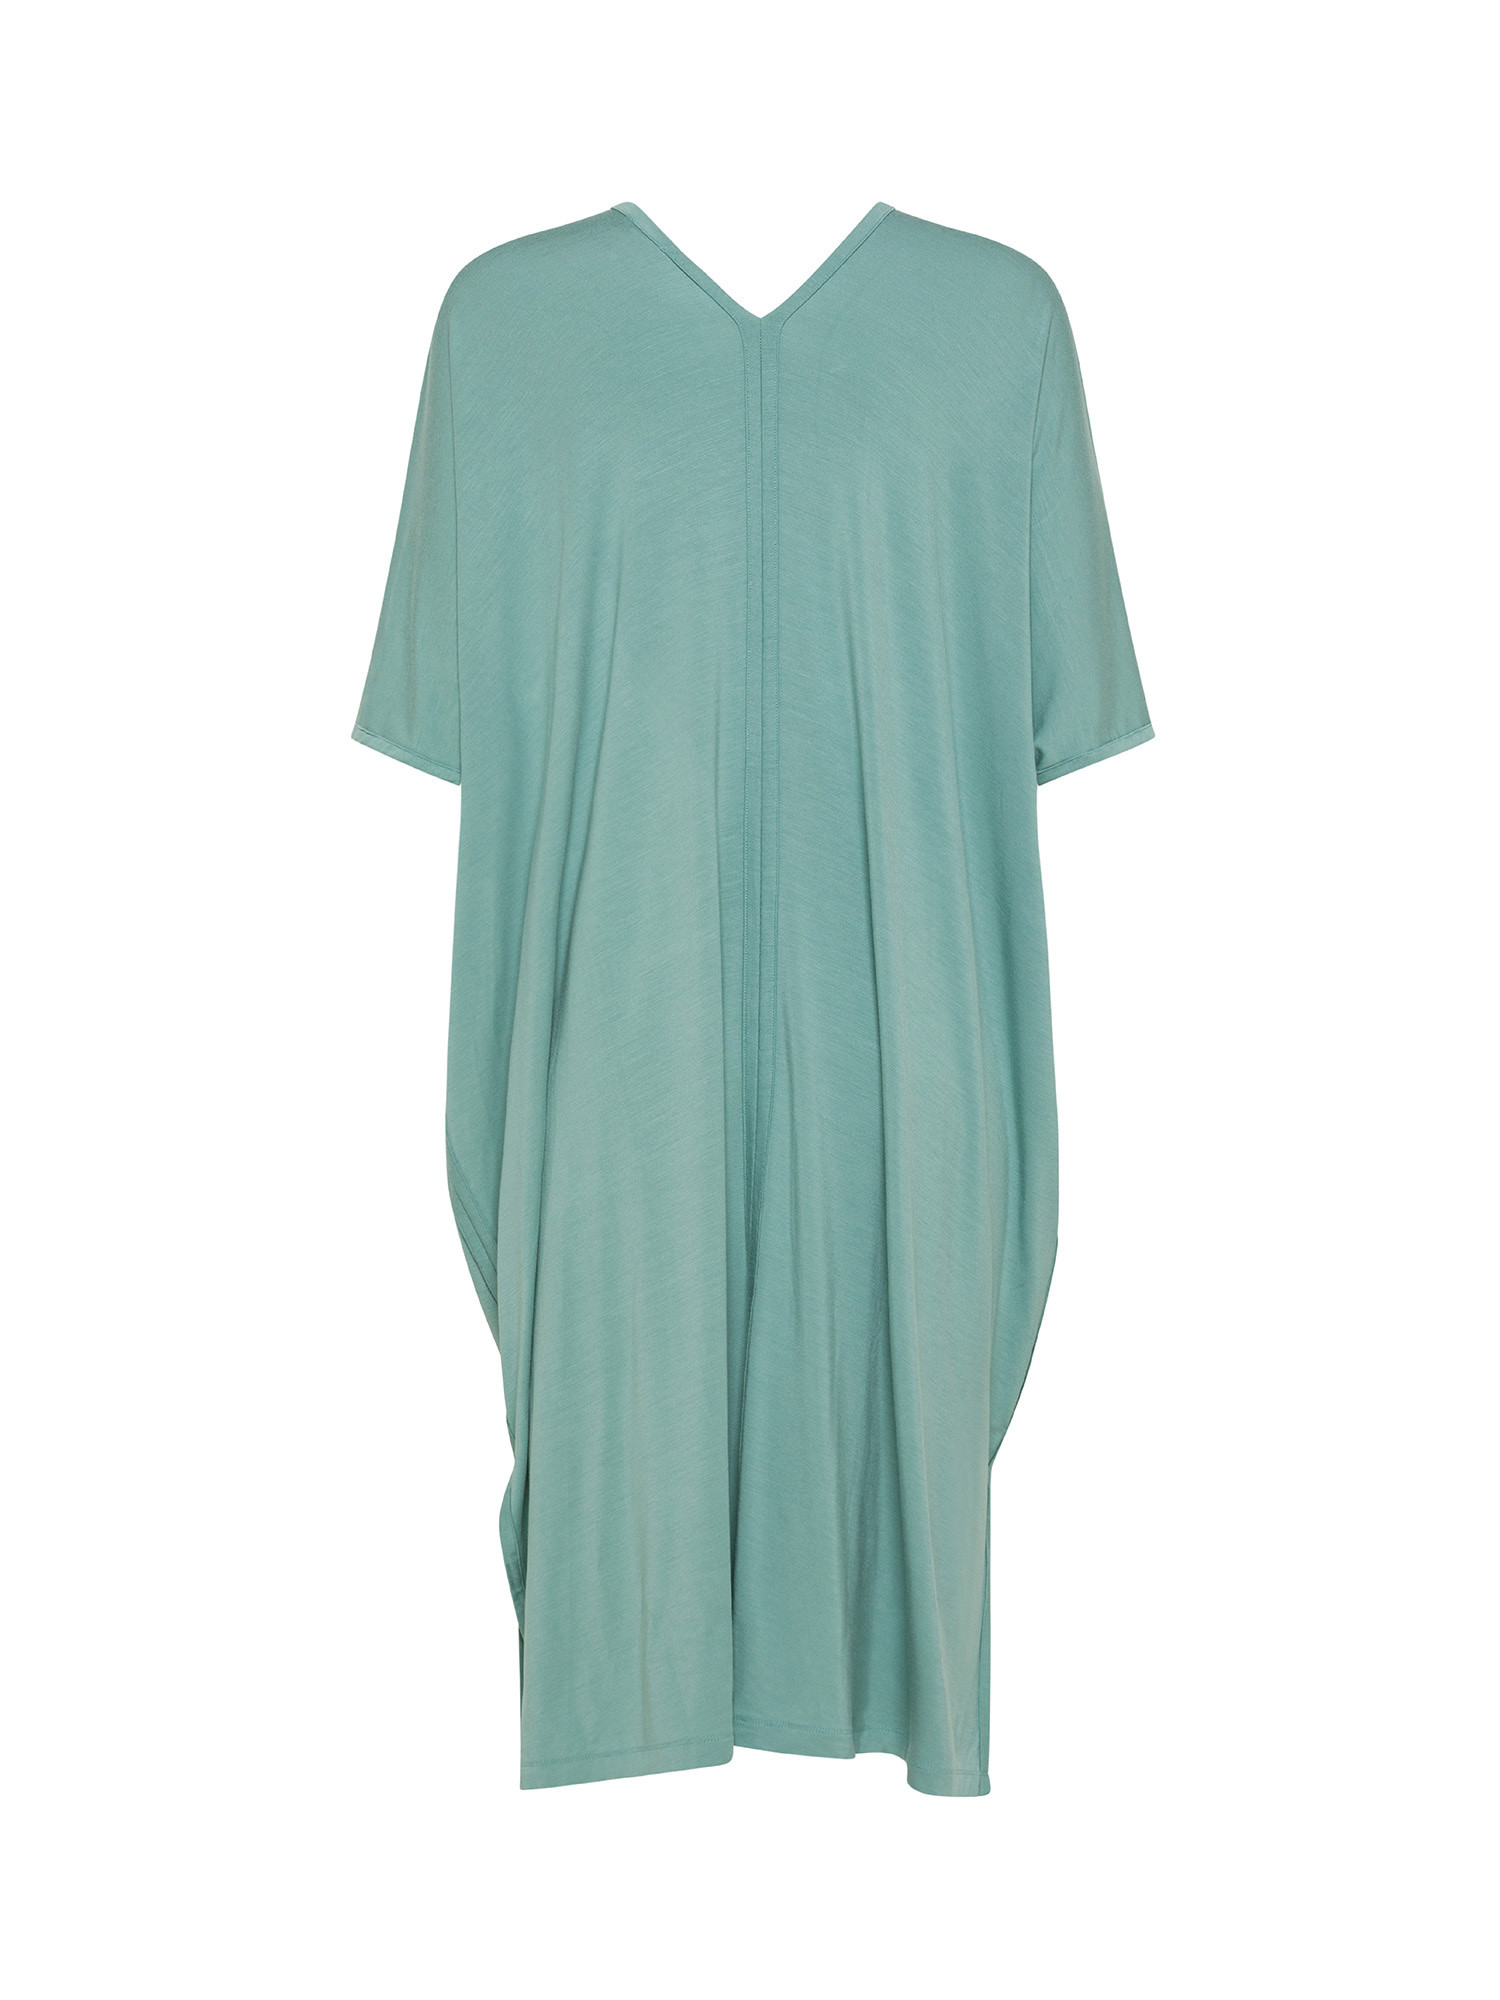 Bamboo viscose dress., Teal, large image number 1